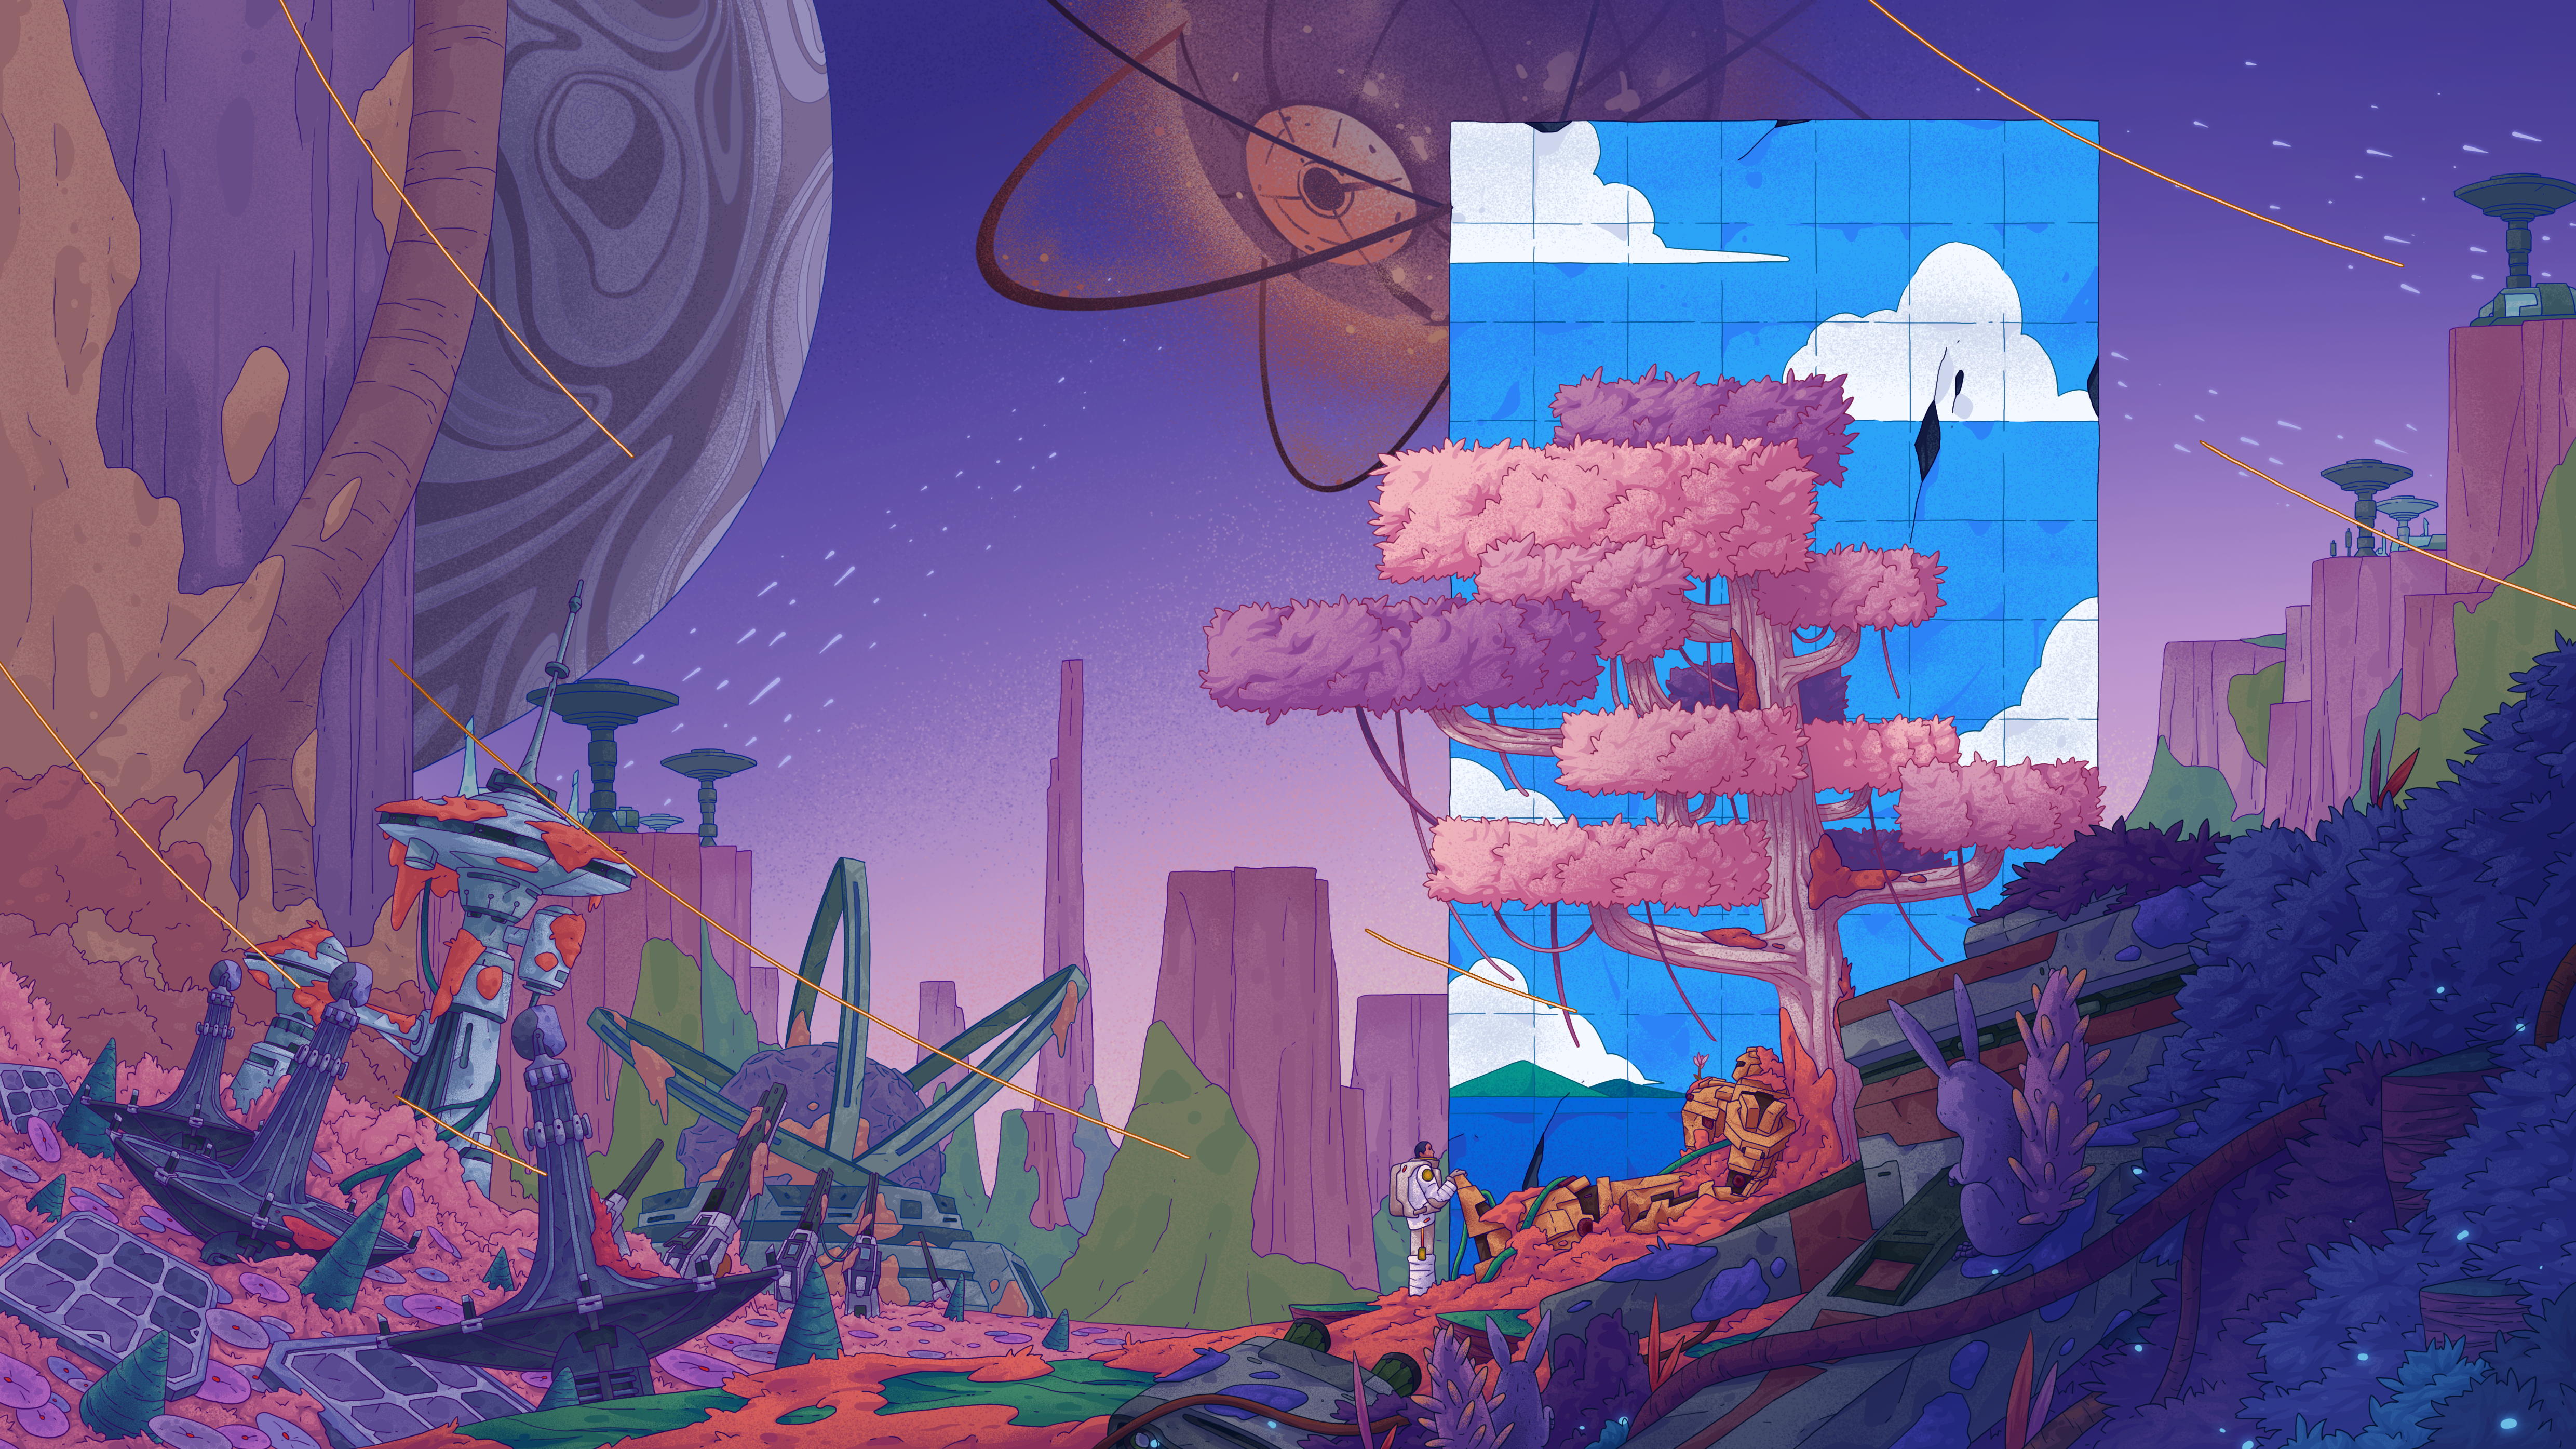 Digital Art Artwork Illustration Landscape Futuristic Fantasy Art Trees Ruins Planet Men Robot 4961x2790